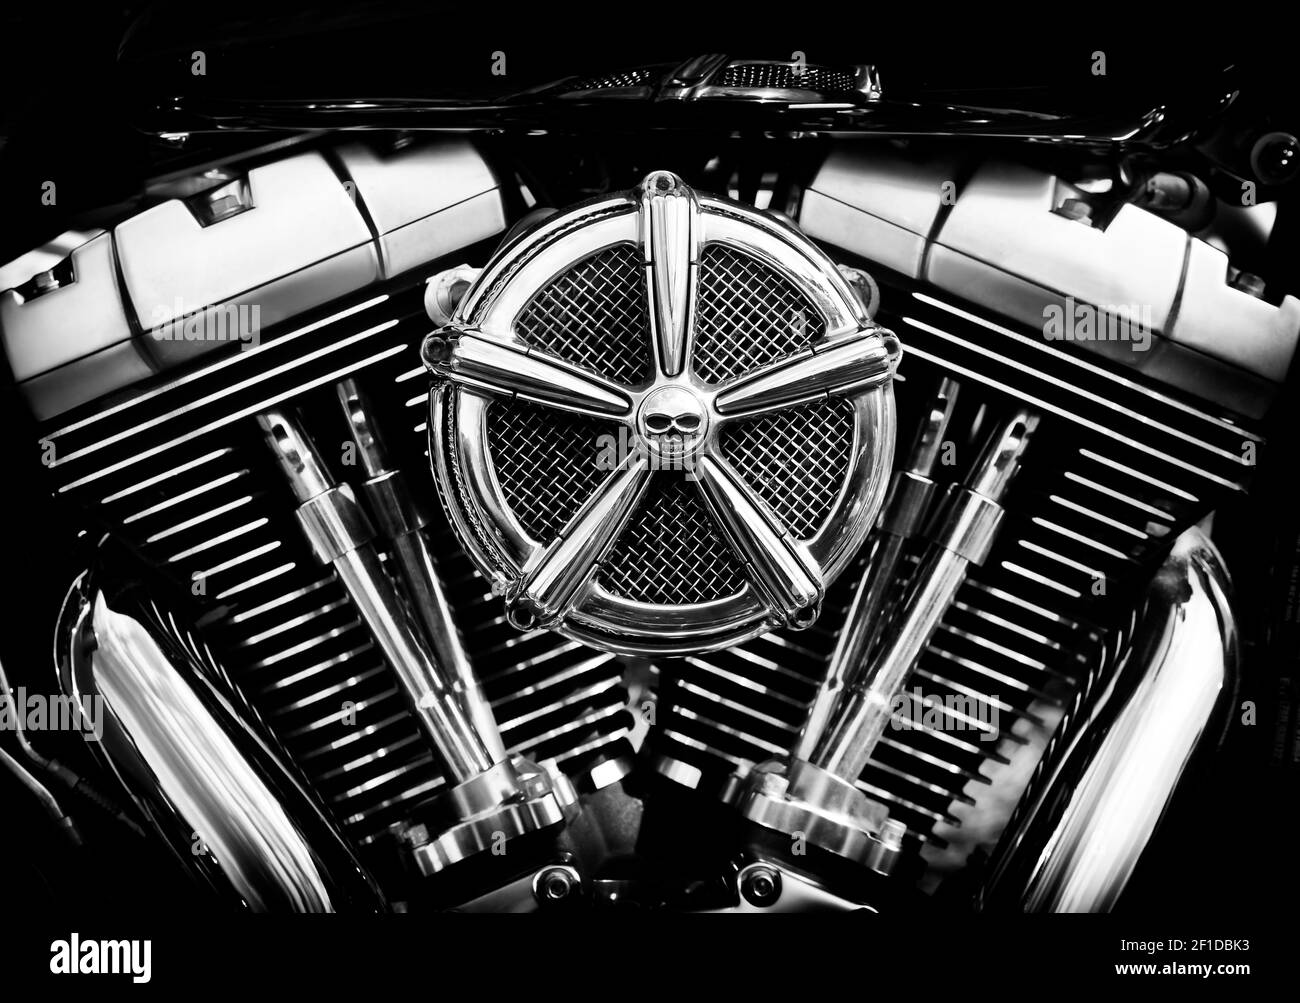 Harley Davidson motorcycle engine. Black and White Stock Photo